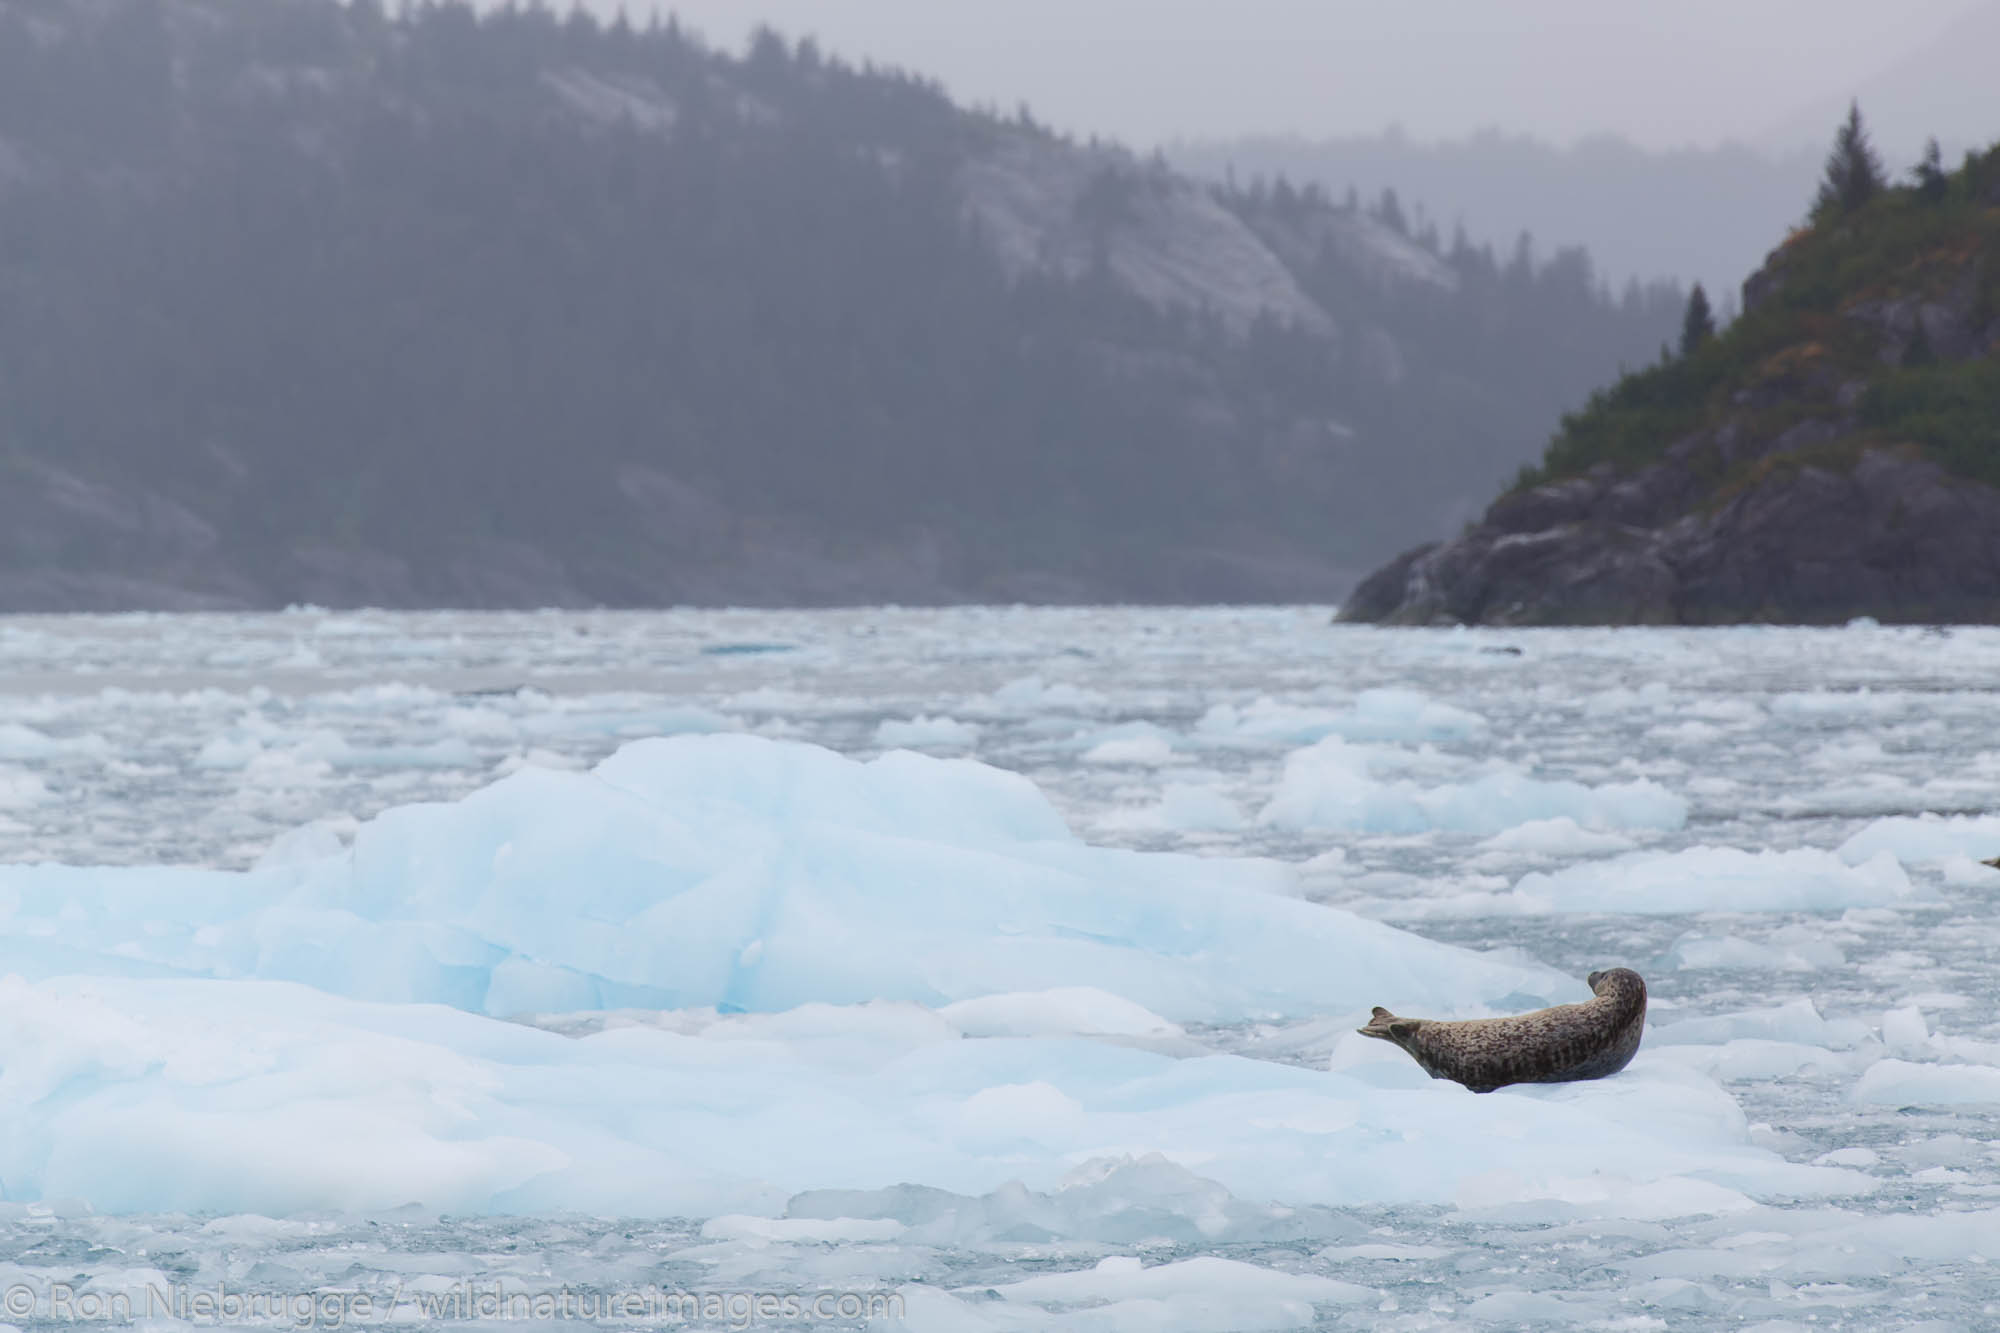 Harbor Seal (Phoca vitulina) at Chenega Glacier in Nassau Fjord, Prince William Sound, Chugach National Forest, Alaska.